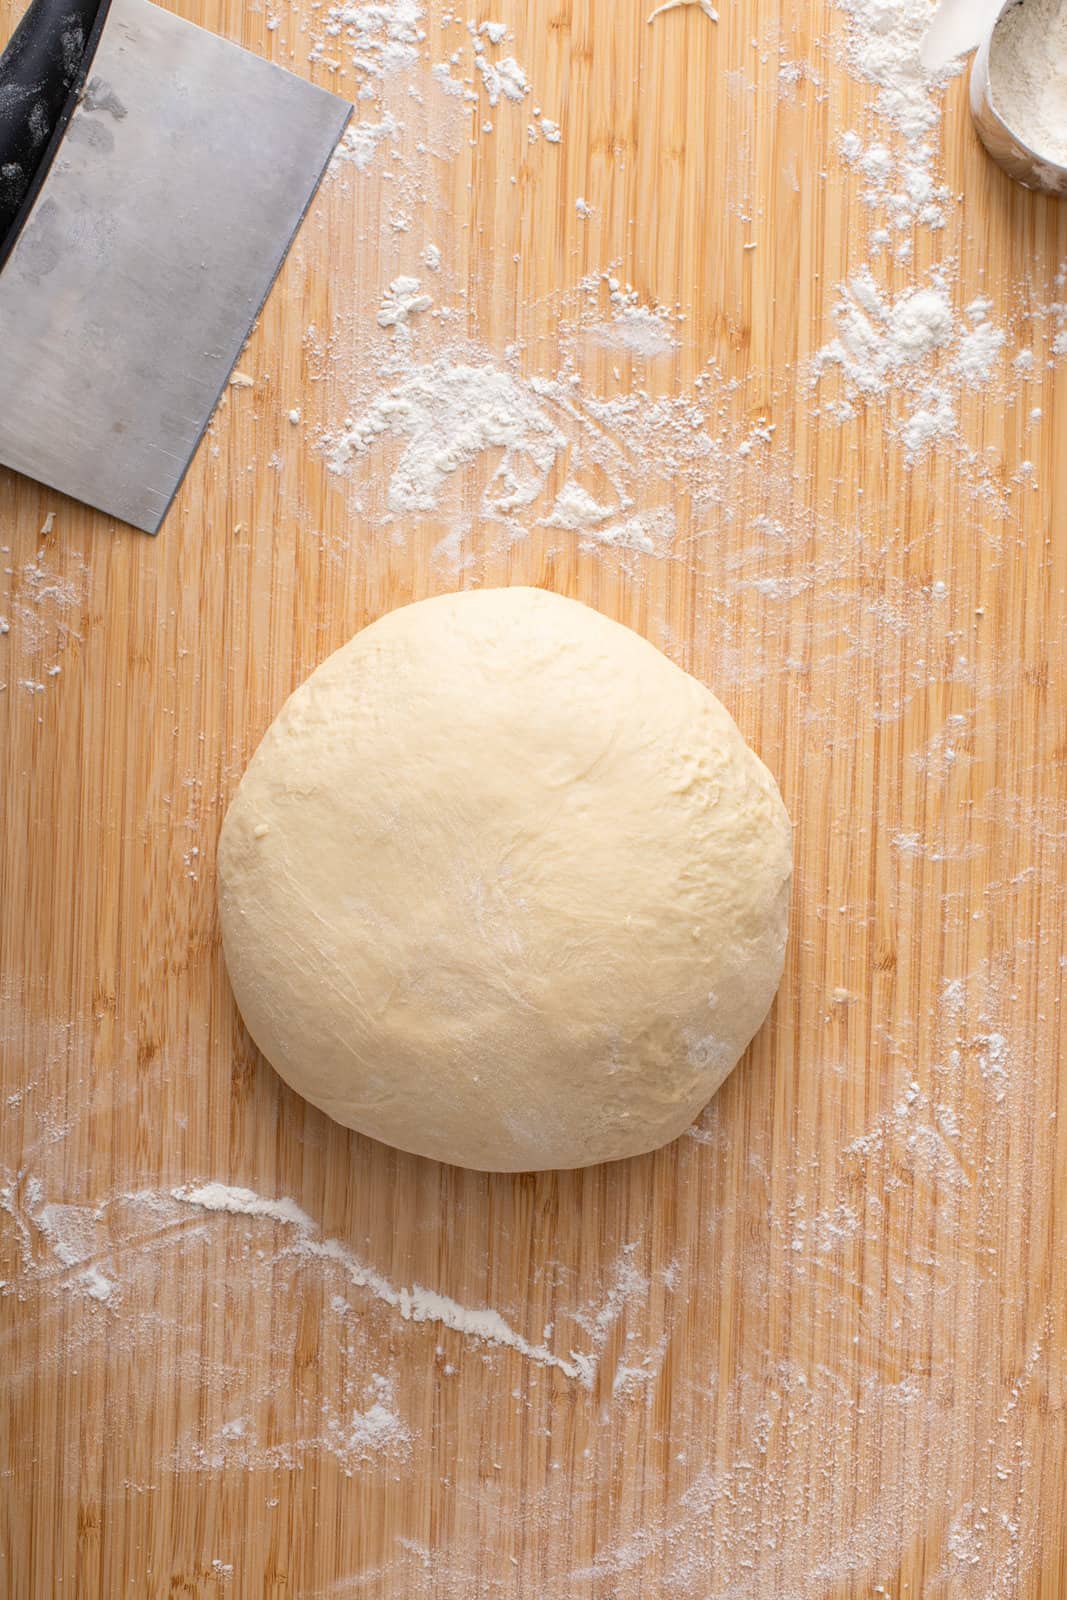 Kneaded texas roadhouse roll dough on a floured cutting board.